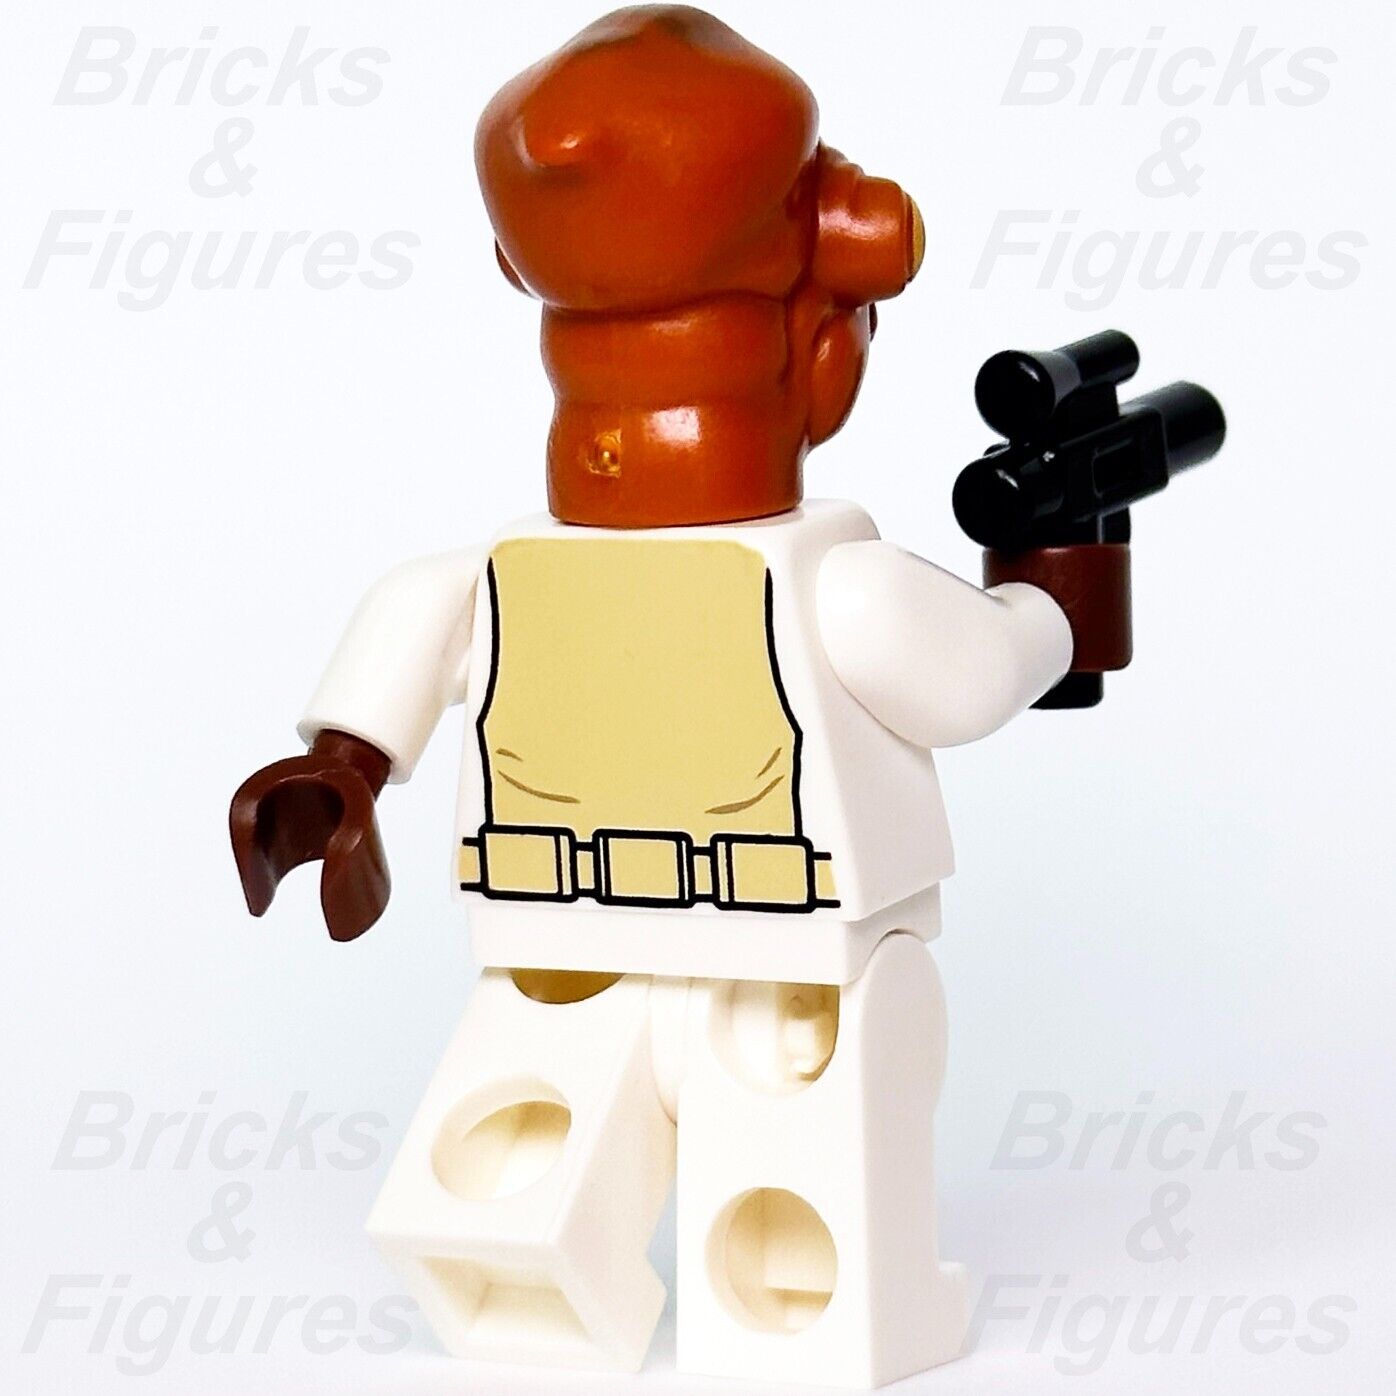 LEGO Star Wars Admiral Ackbar Minifigure Mon Calamari 75003 7754 sw0247 Minifig - Bricks & Figures